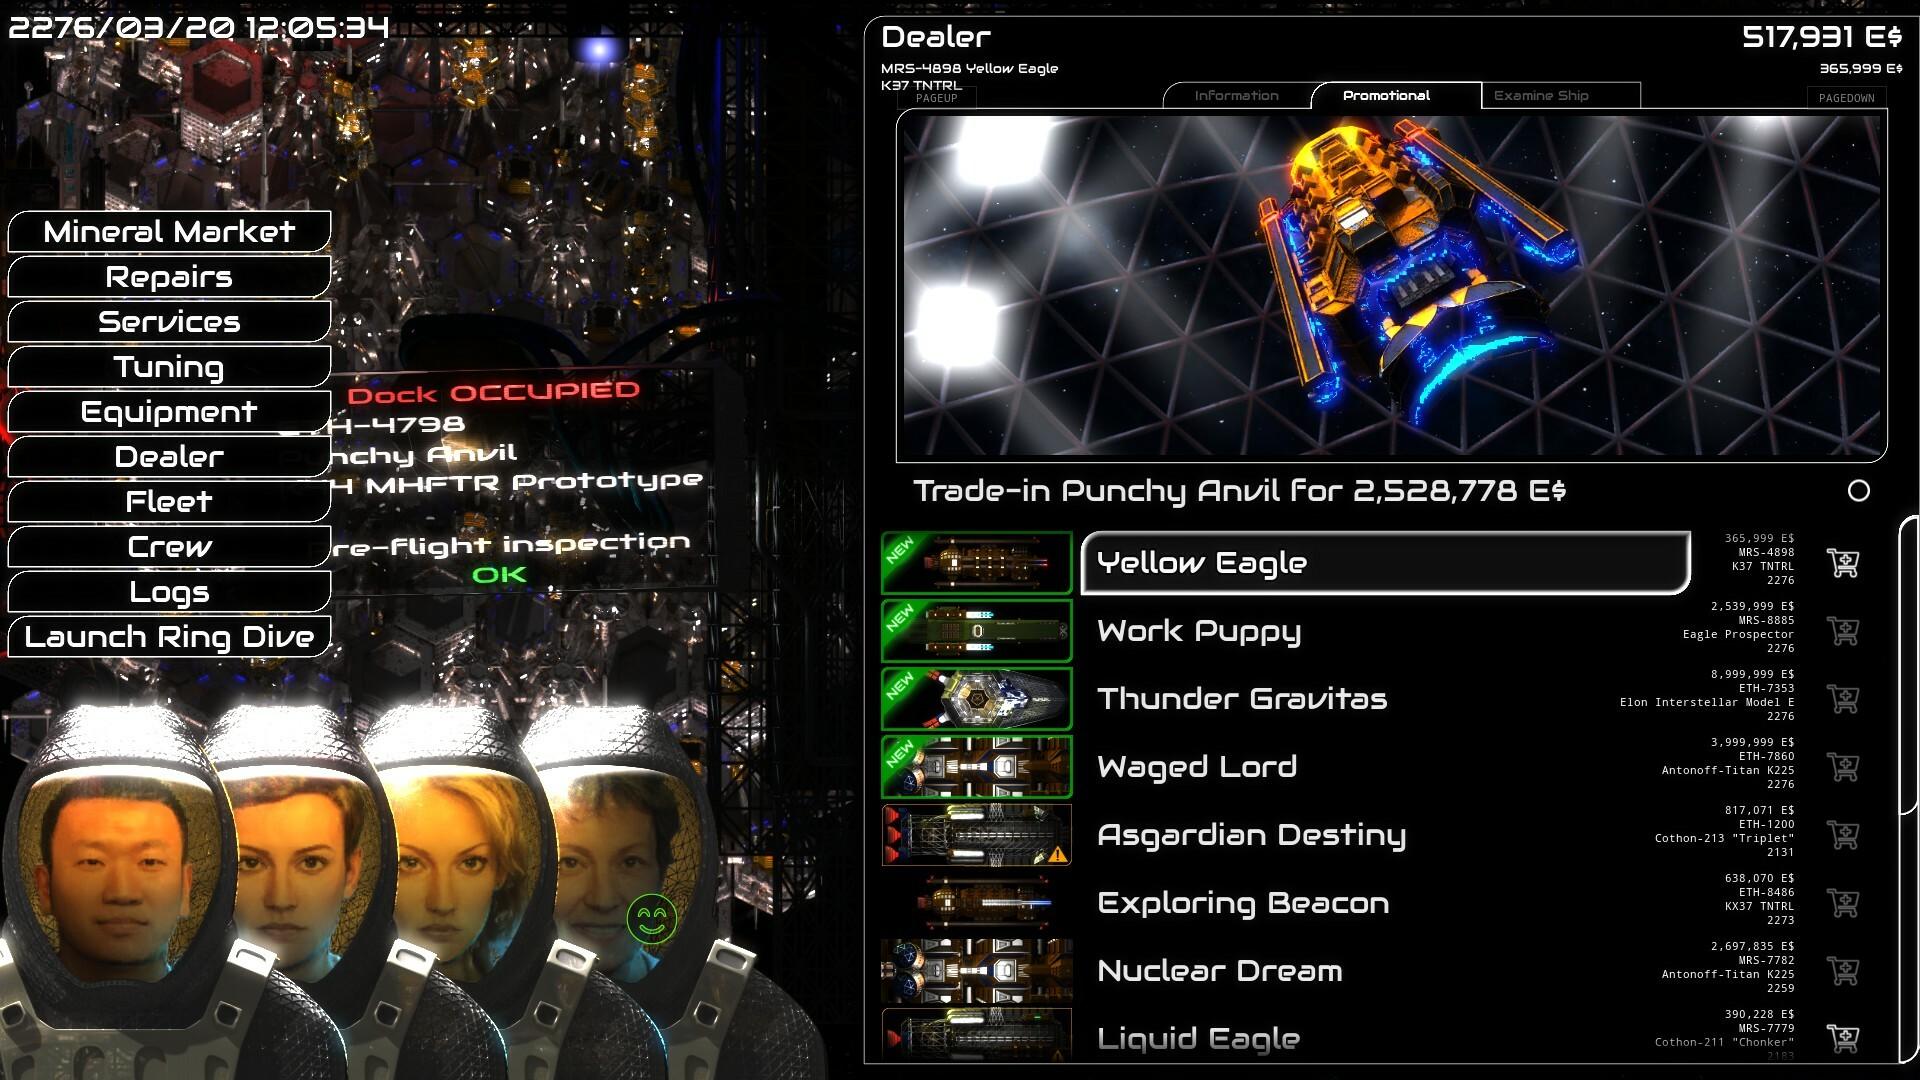 Screenshot №4 from game ΔV: Rings of Saturn